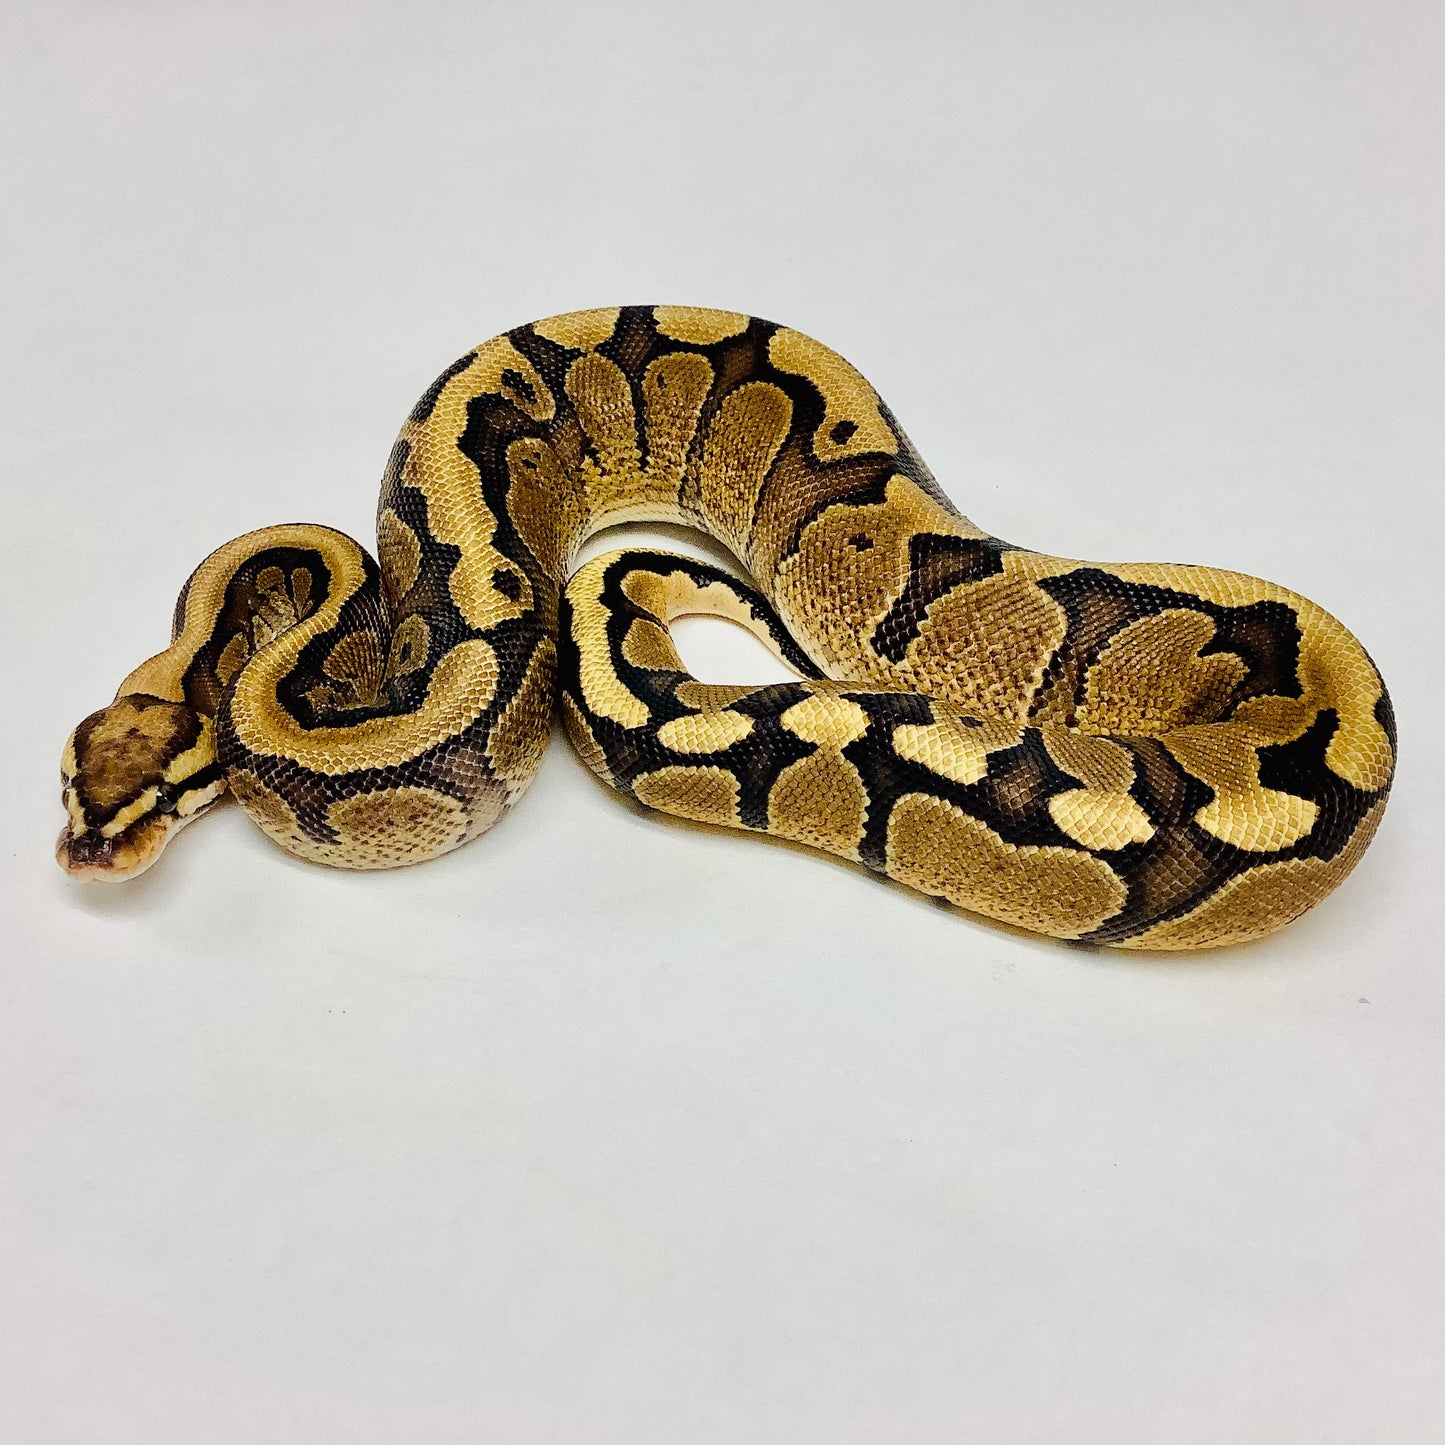 Vanilla Red Stripe Ball Python - Male #2021M01